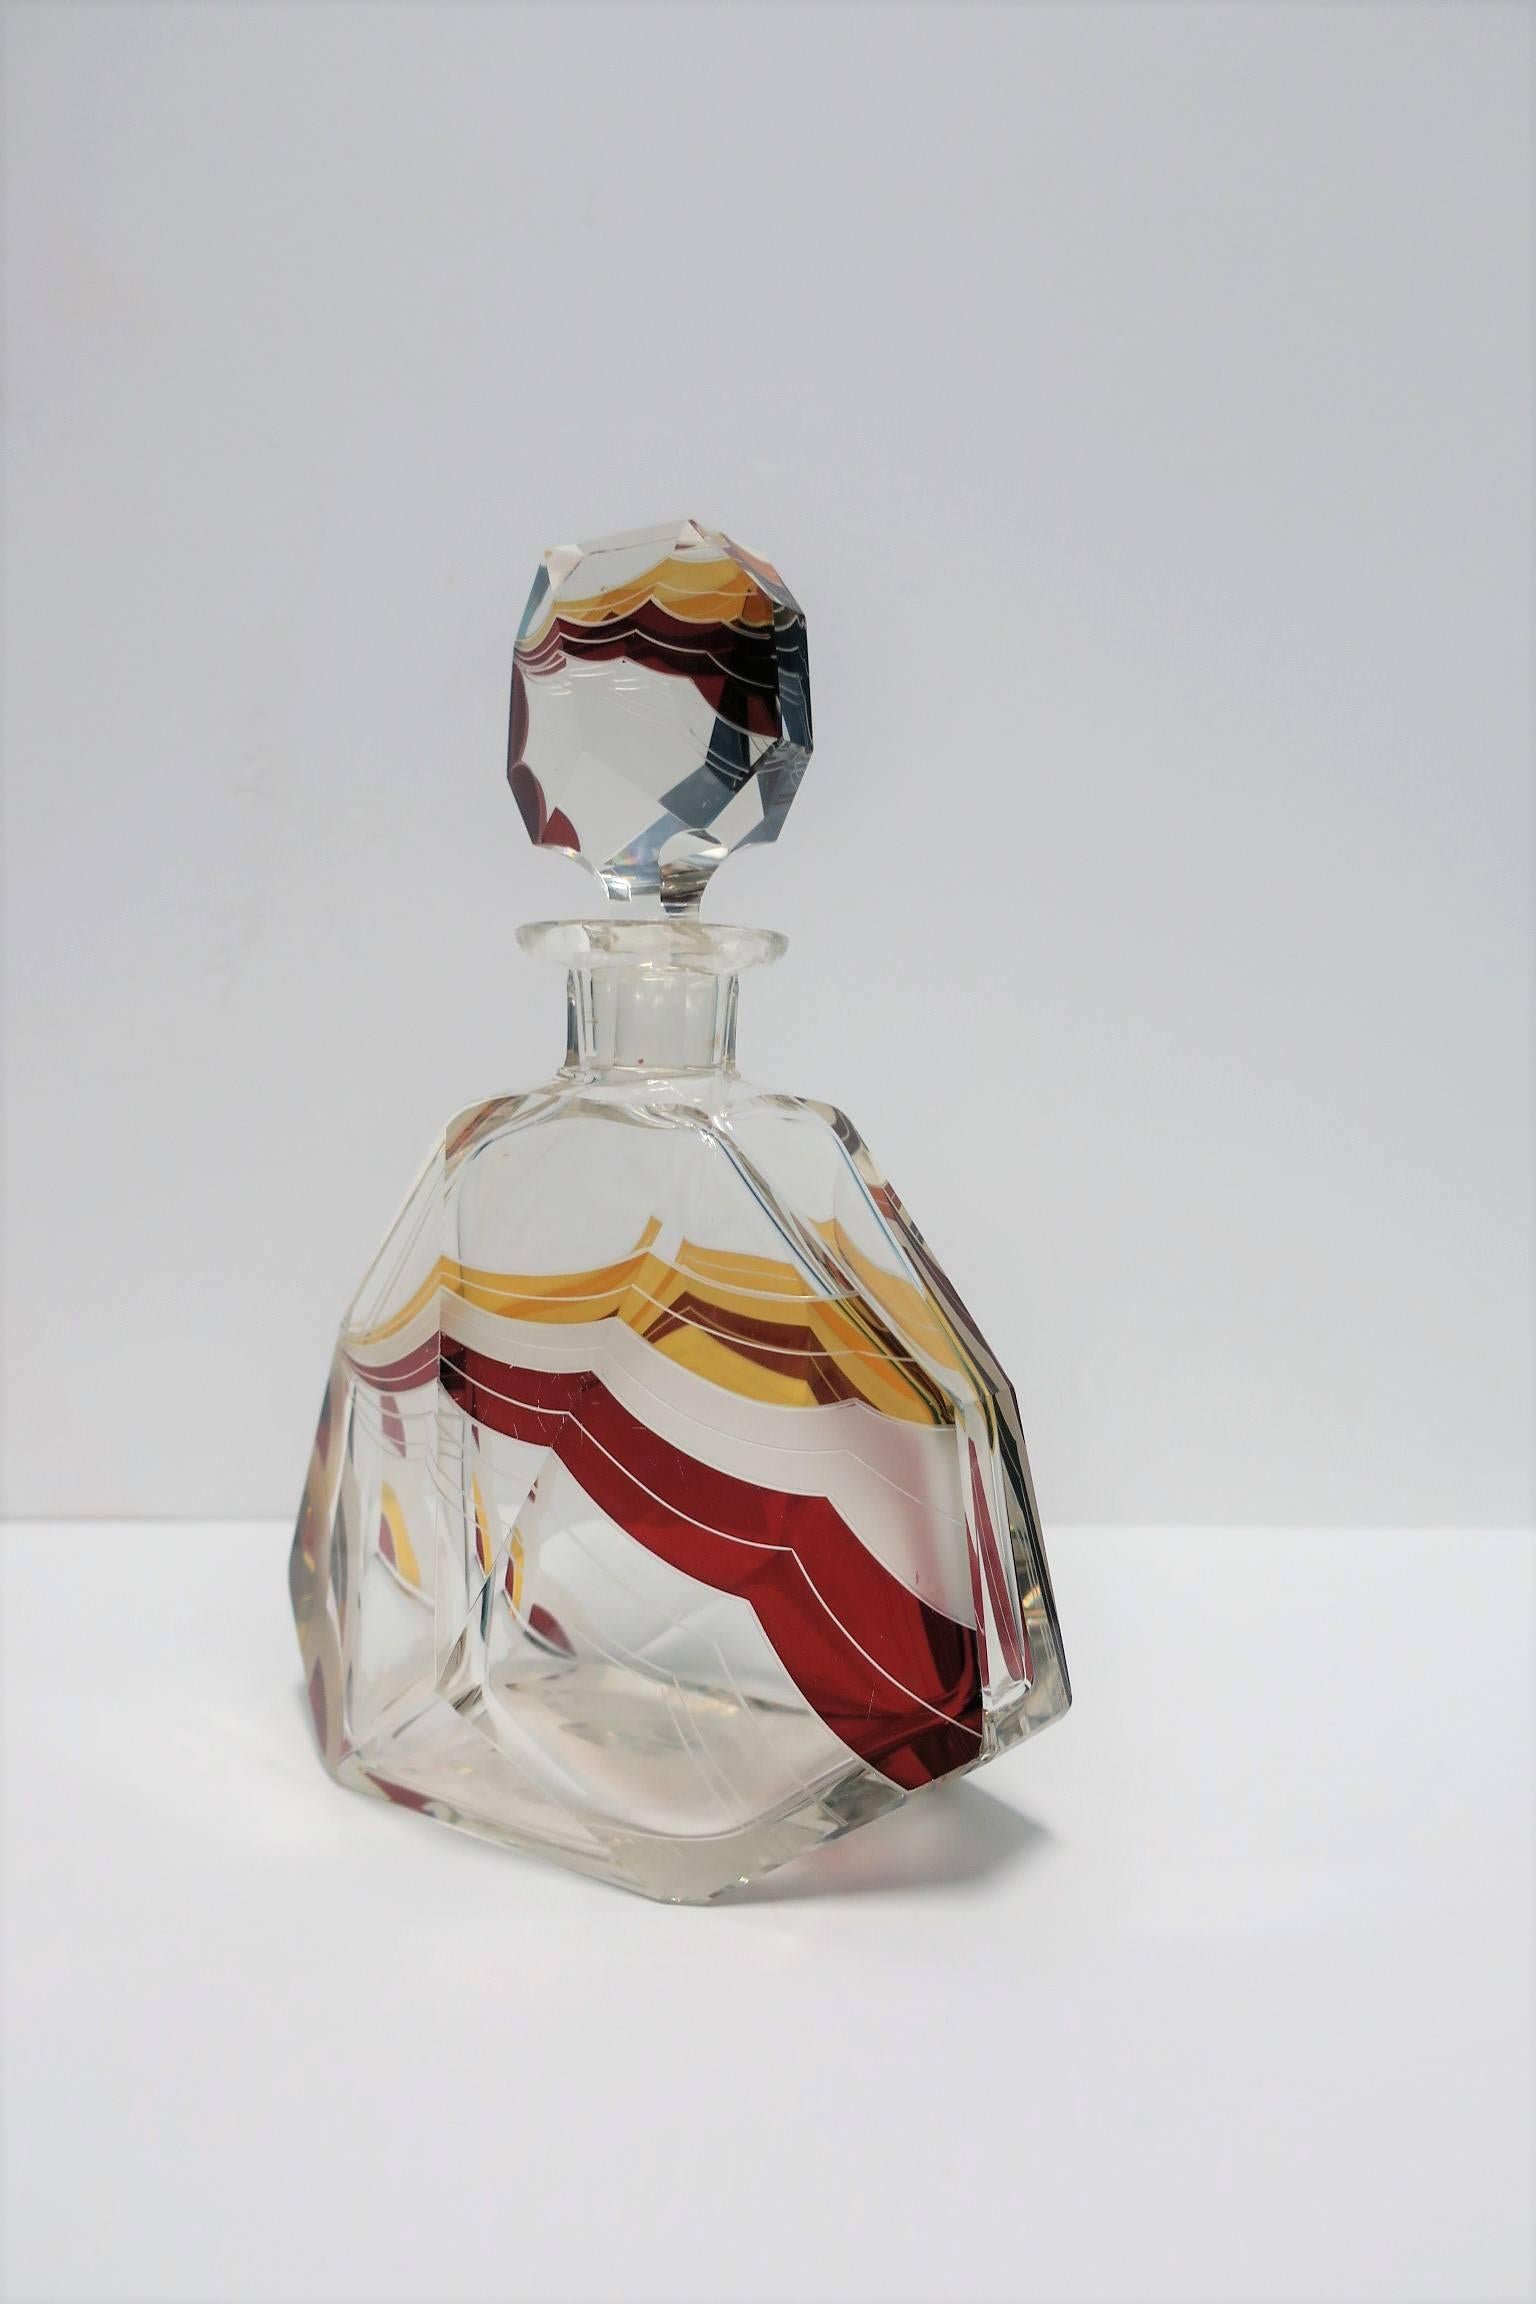 Czech European Art Deco Liquor or Spirits Crystal Decanter by Designer Karl Palda